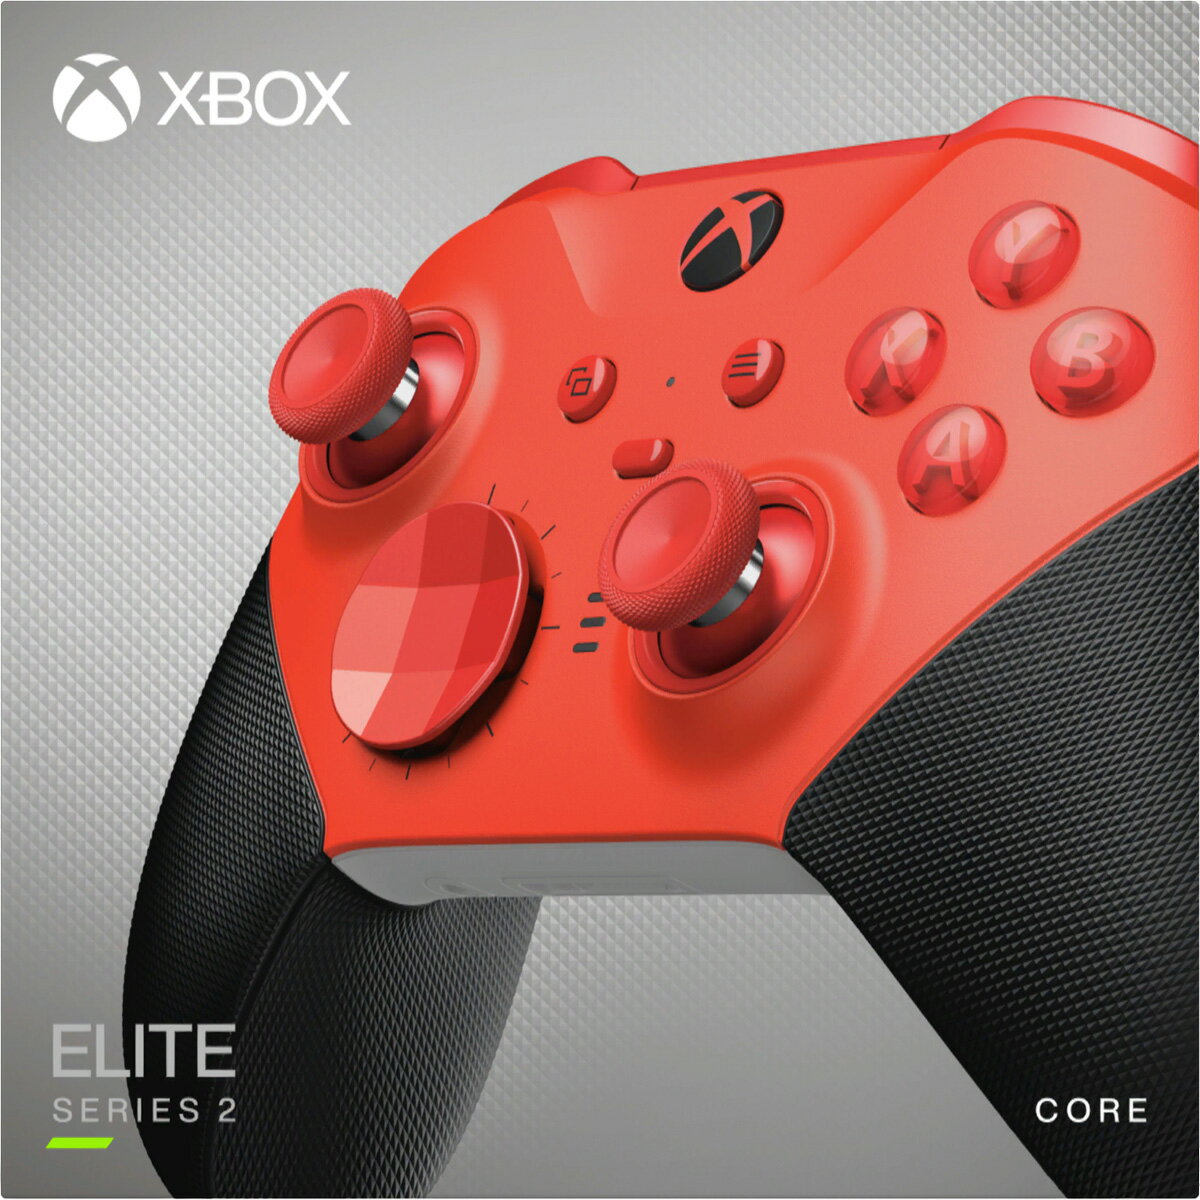 X box マイクロソフト Xbox Elite ワイヤレス コントローラー Series 2 Core Edition (レッド) [RFZ-00015 XboxElite コントローラー2Core レッド]